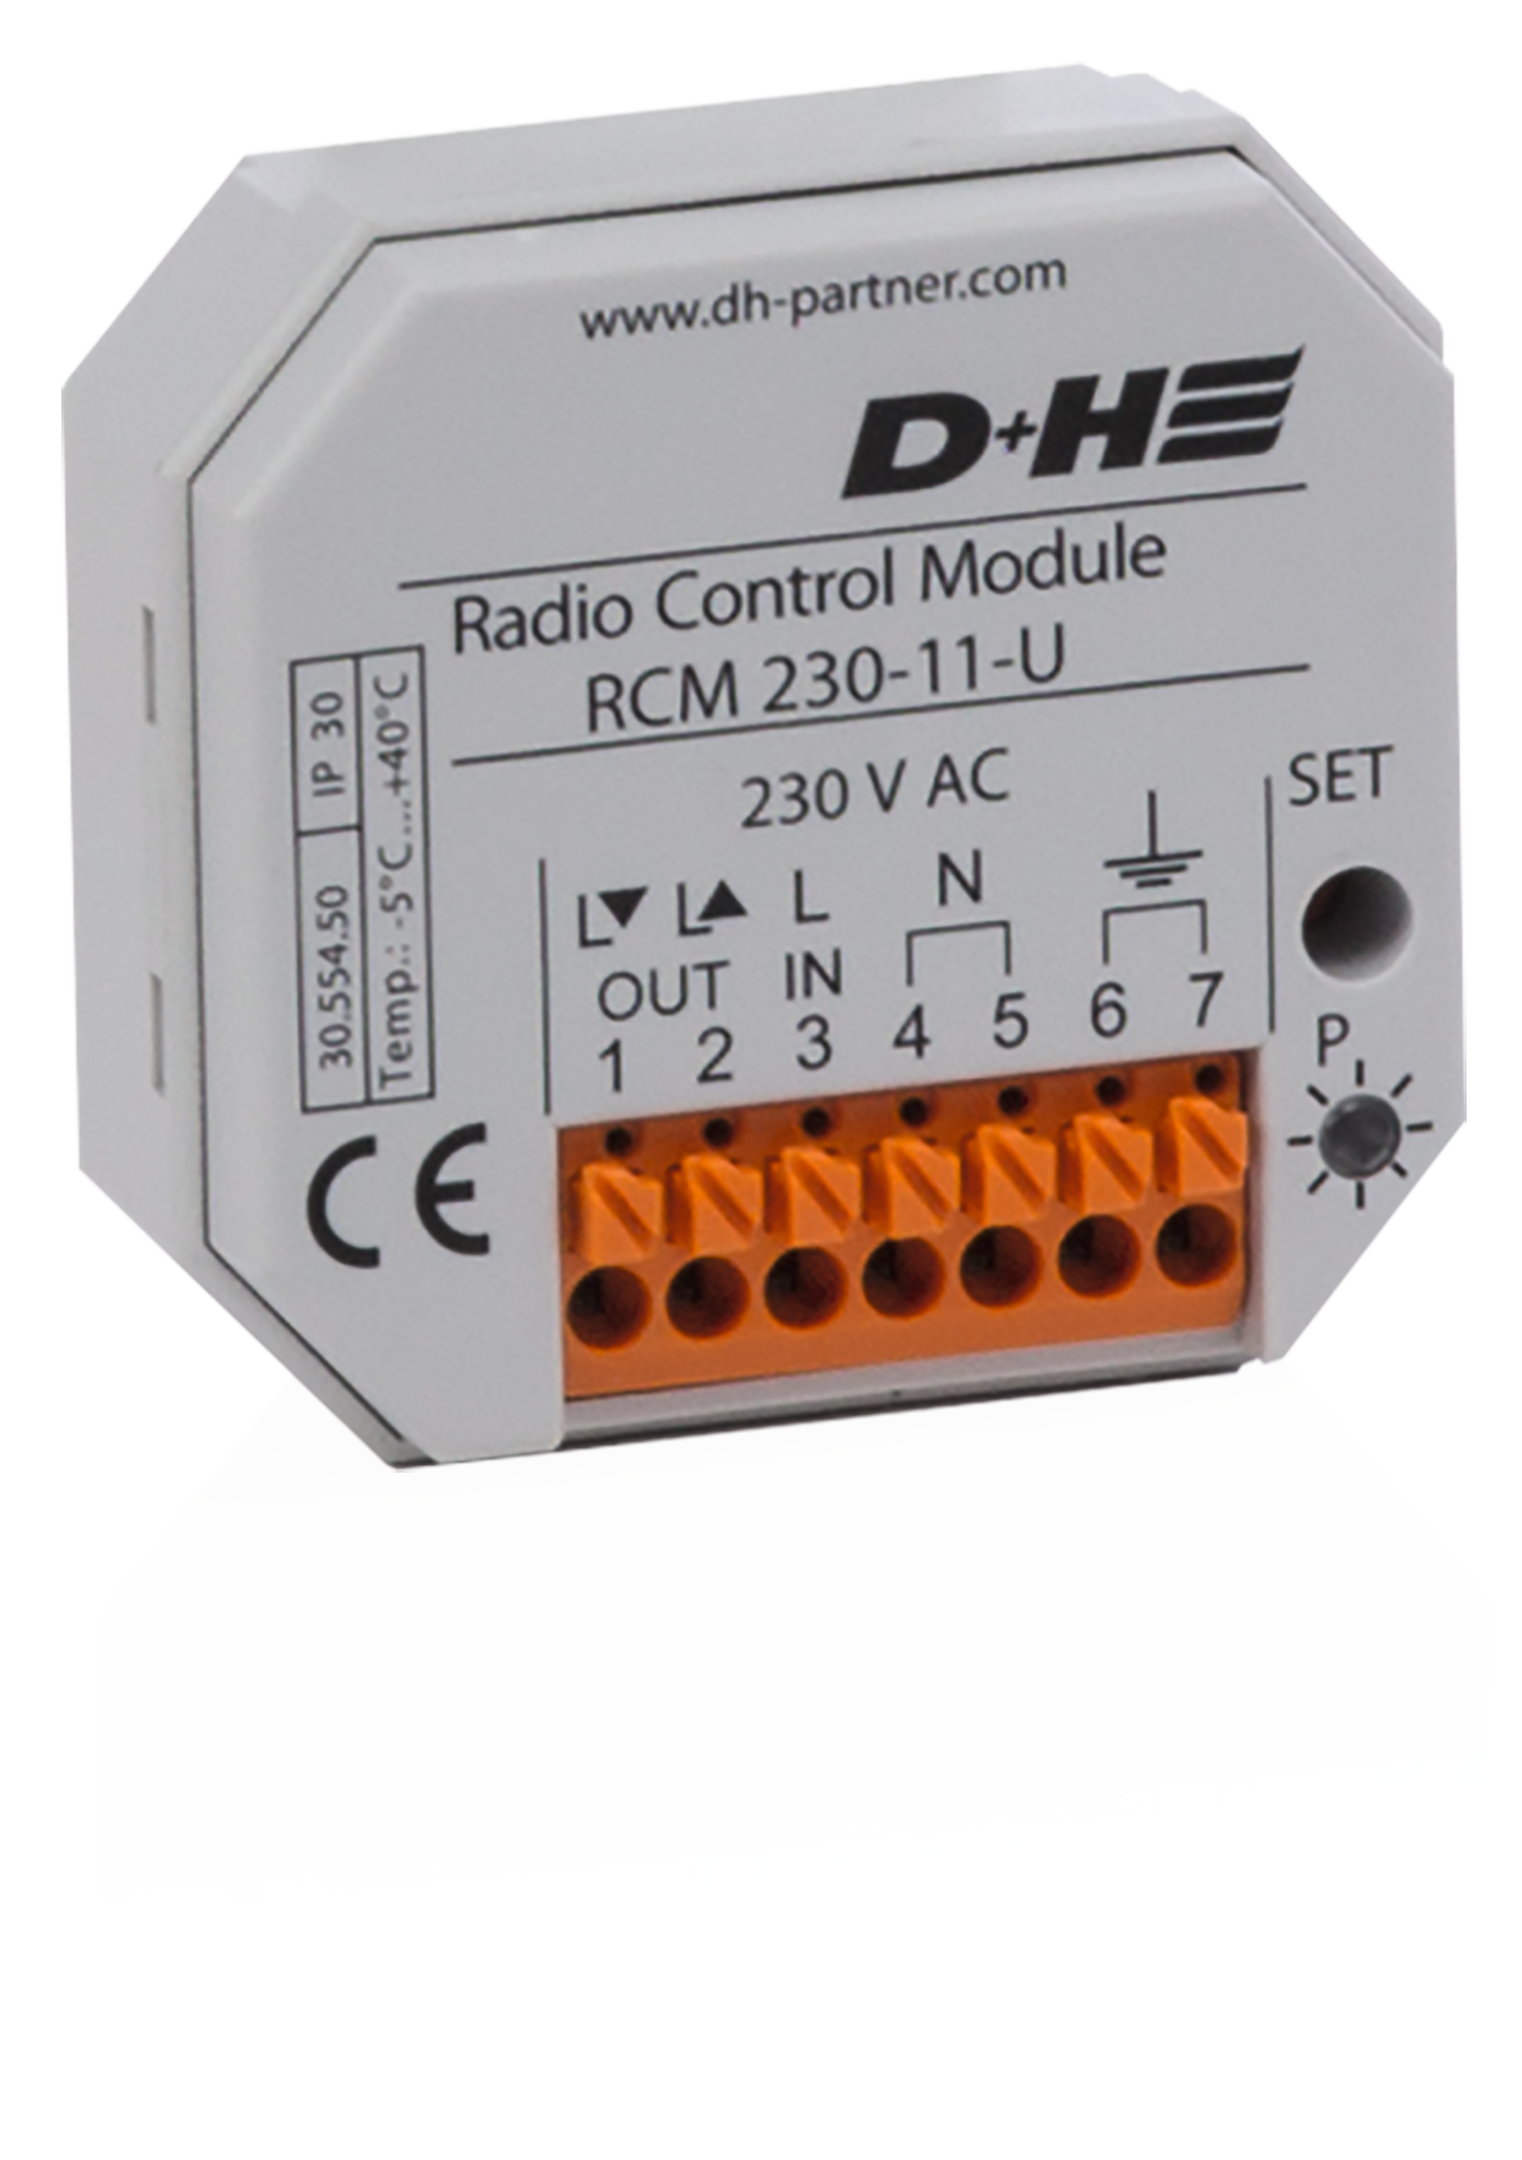 D+H wireless receiving module RCM 230-11-U 